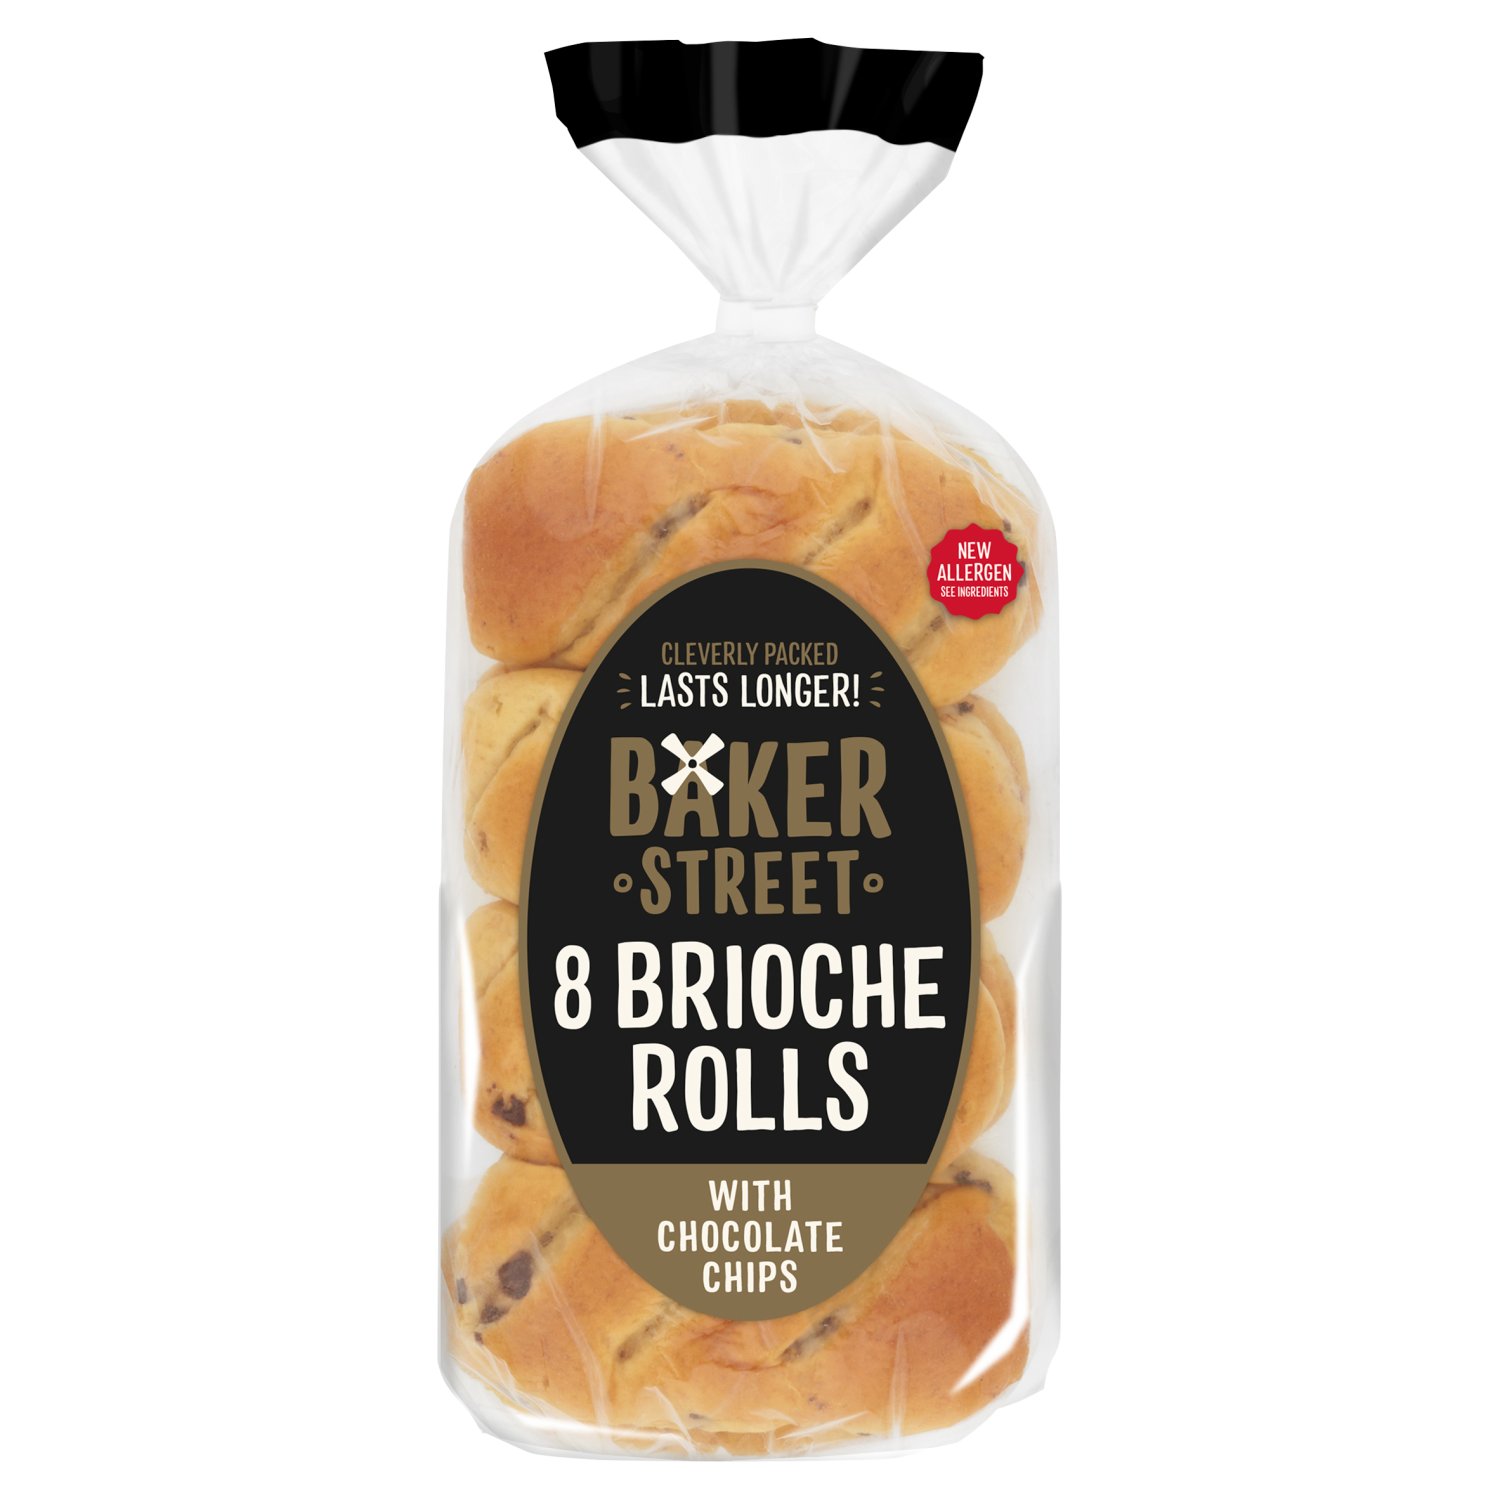 Baker Street Brioche Rolls with Choc Chips 8 Pack (280 g)